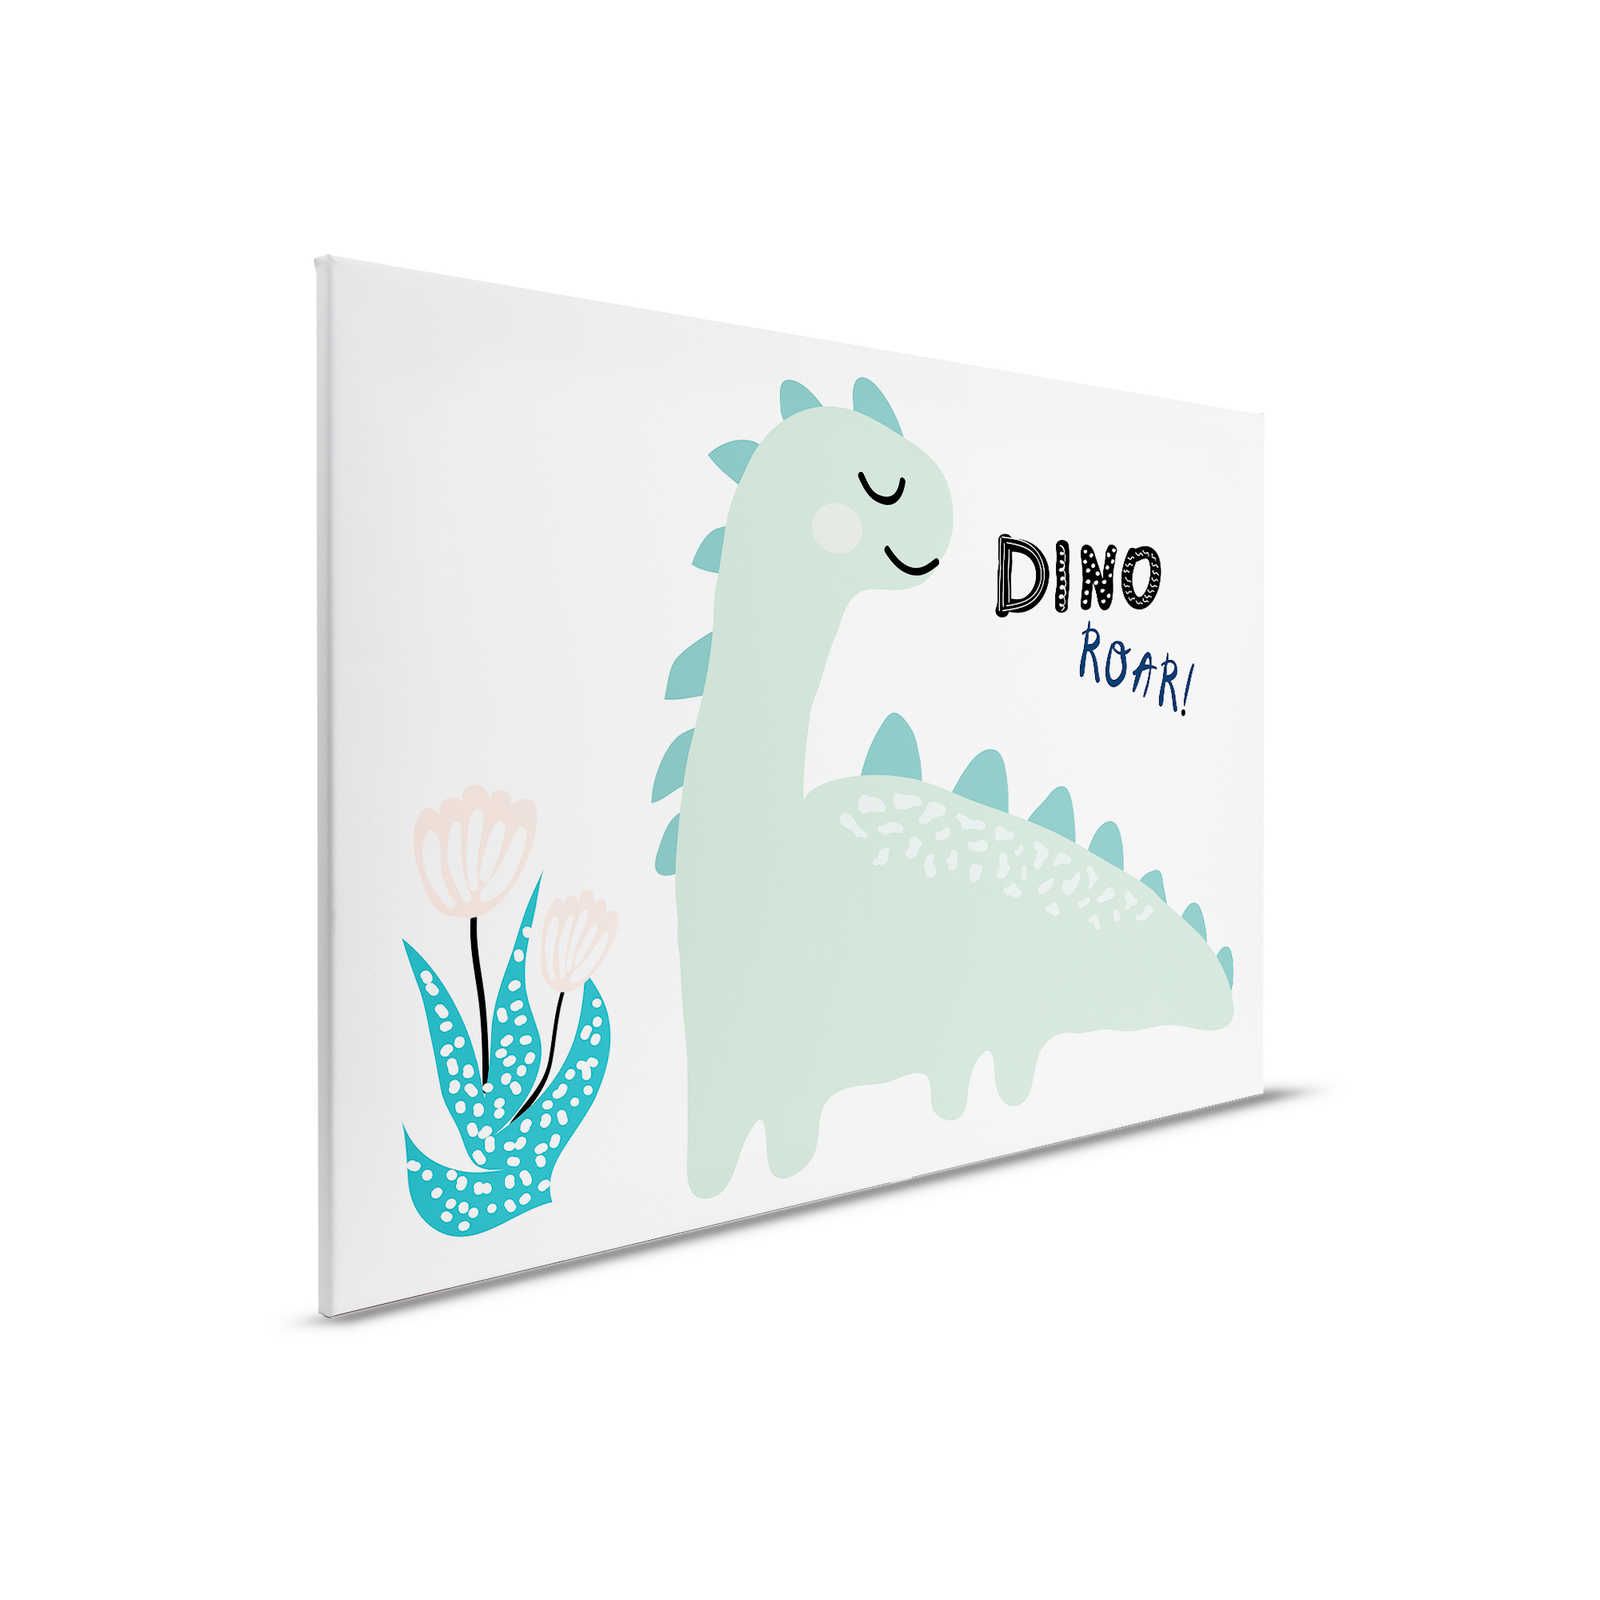 Toile avec dinosaure peint - 90 cm x 60 cm
